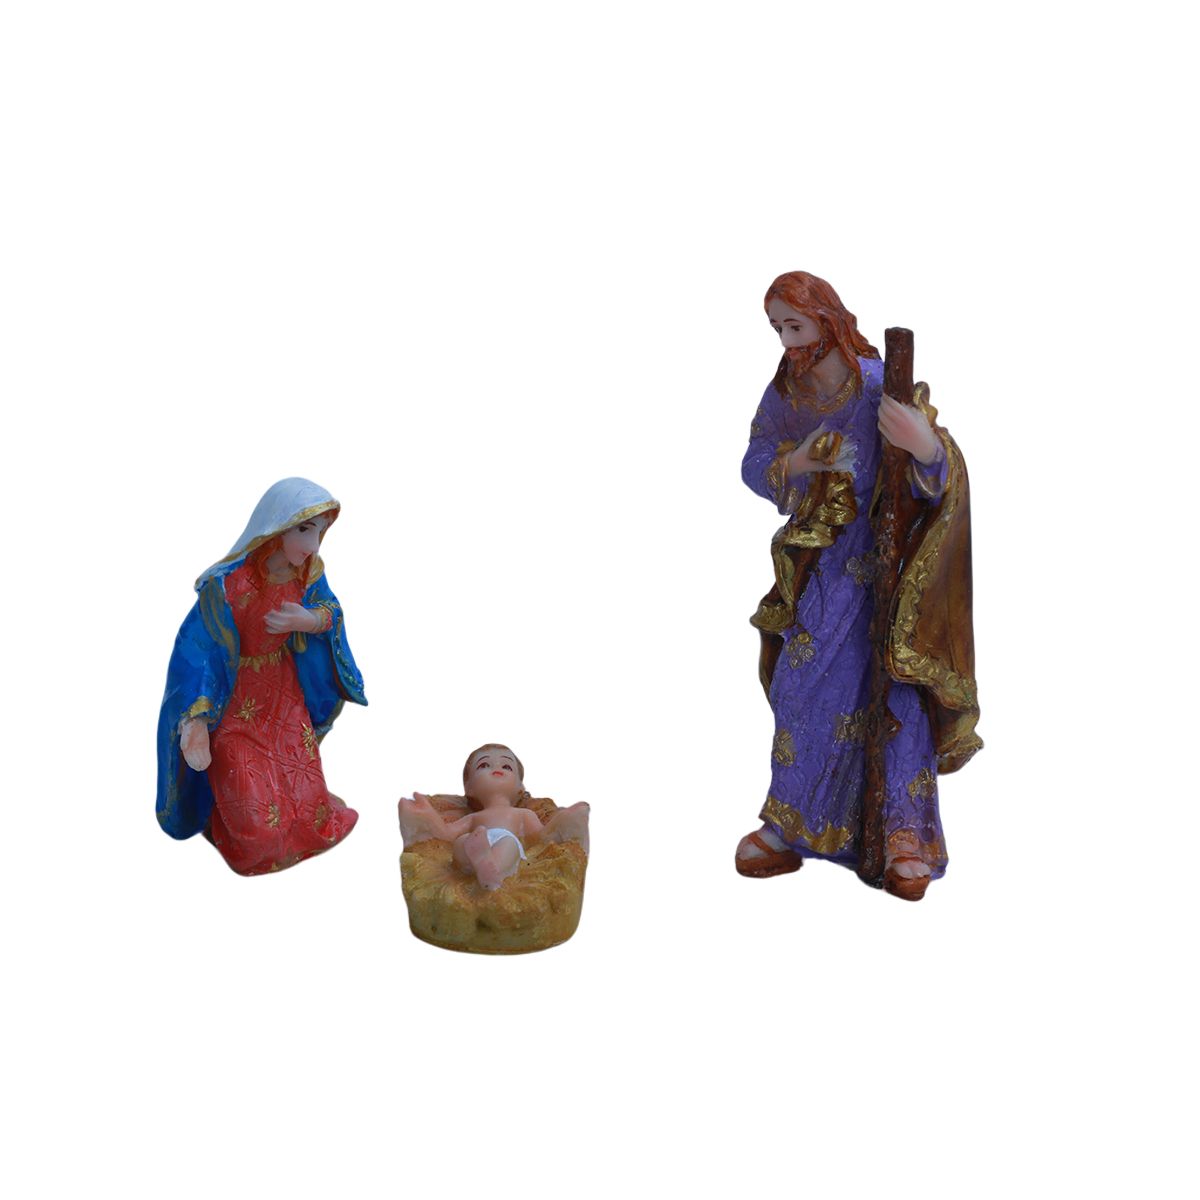 Idolmaker Crib/ Nativity Set for Christmas -5 Inch -3 piece